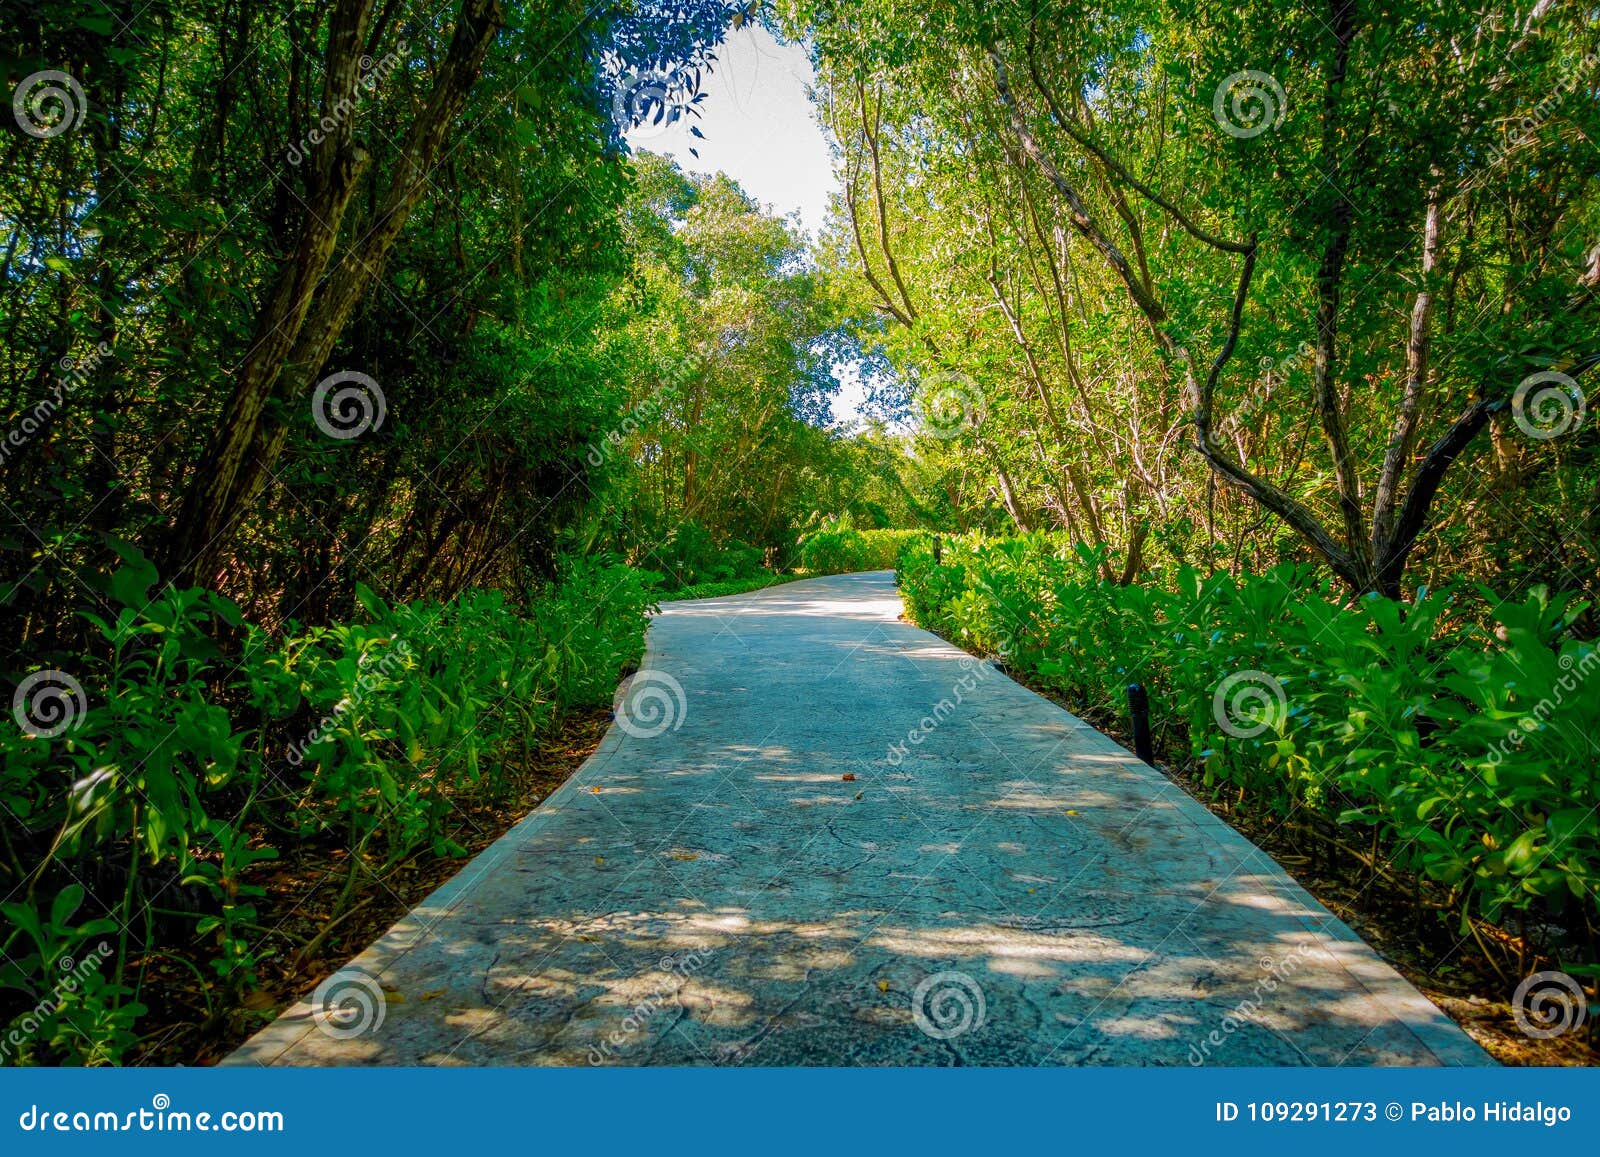 beautiful stone path surrounding of vegetation in playacar neighborhood, playa del carmen, mexico